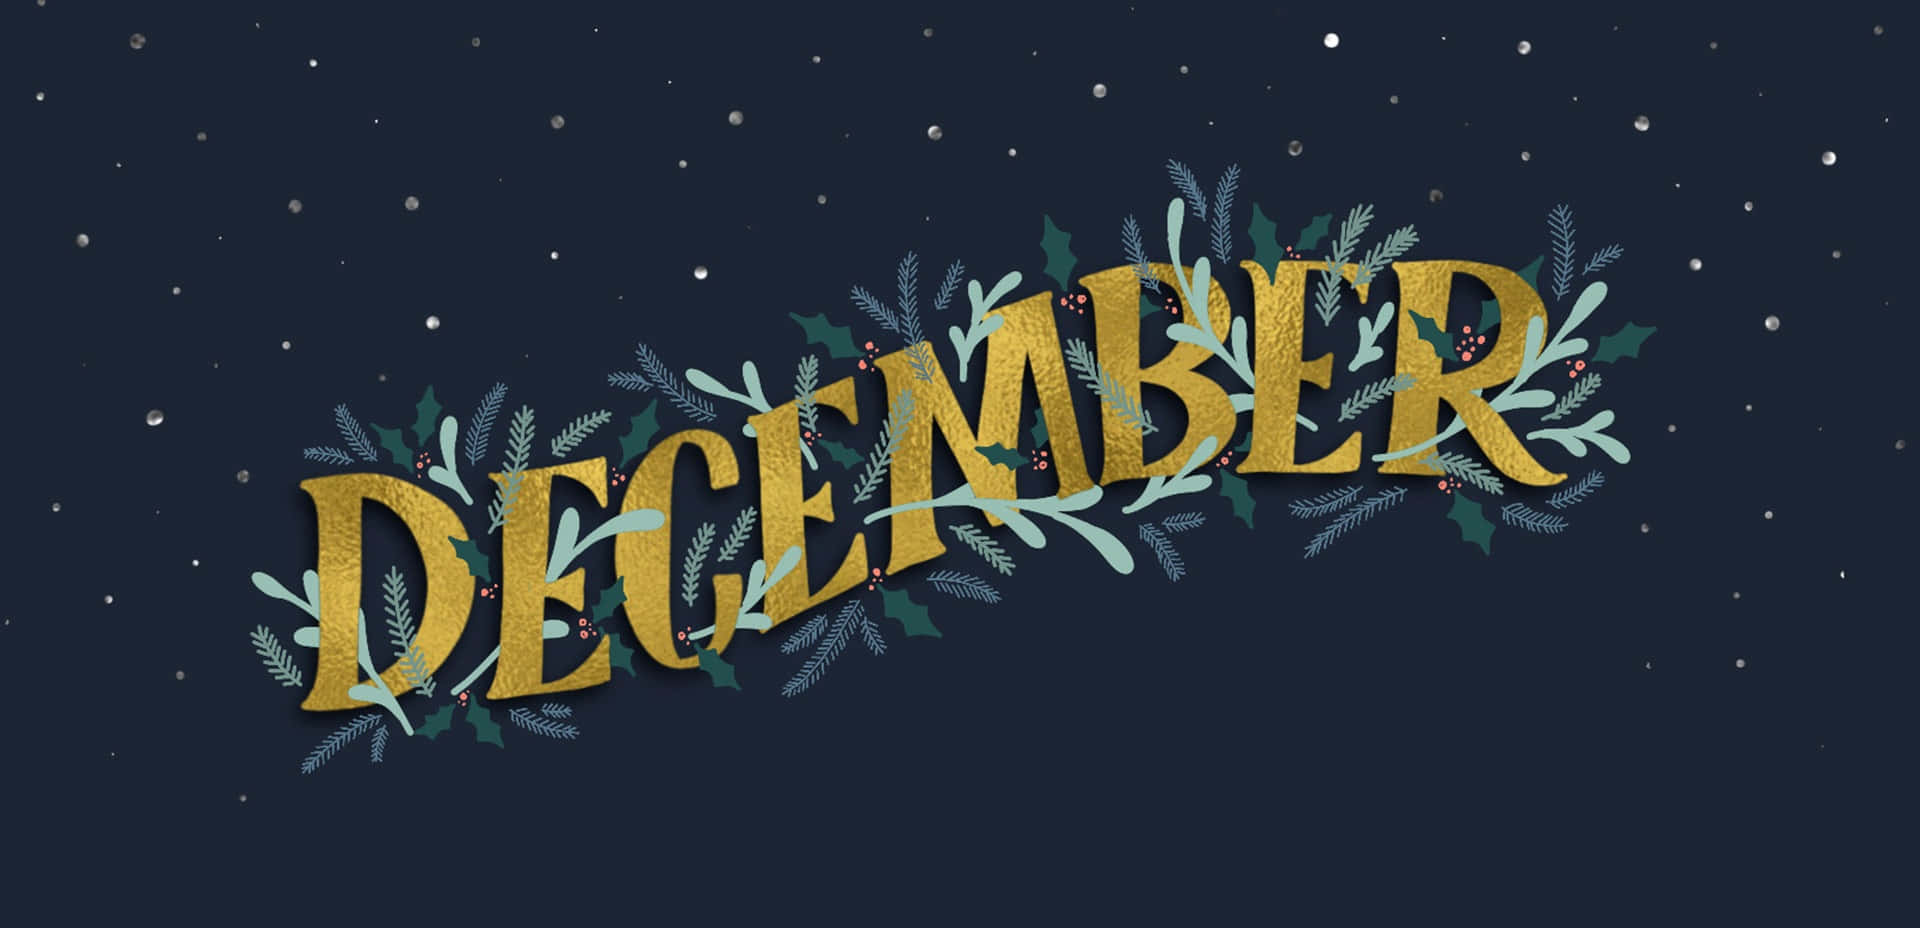 Festive December Graphic Wallpaper